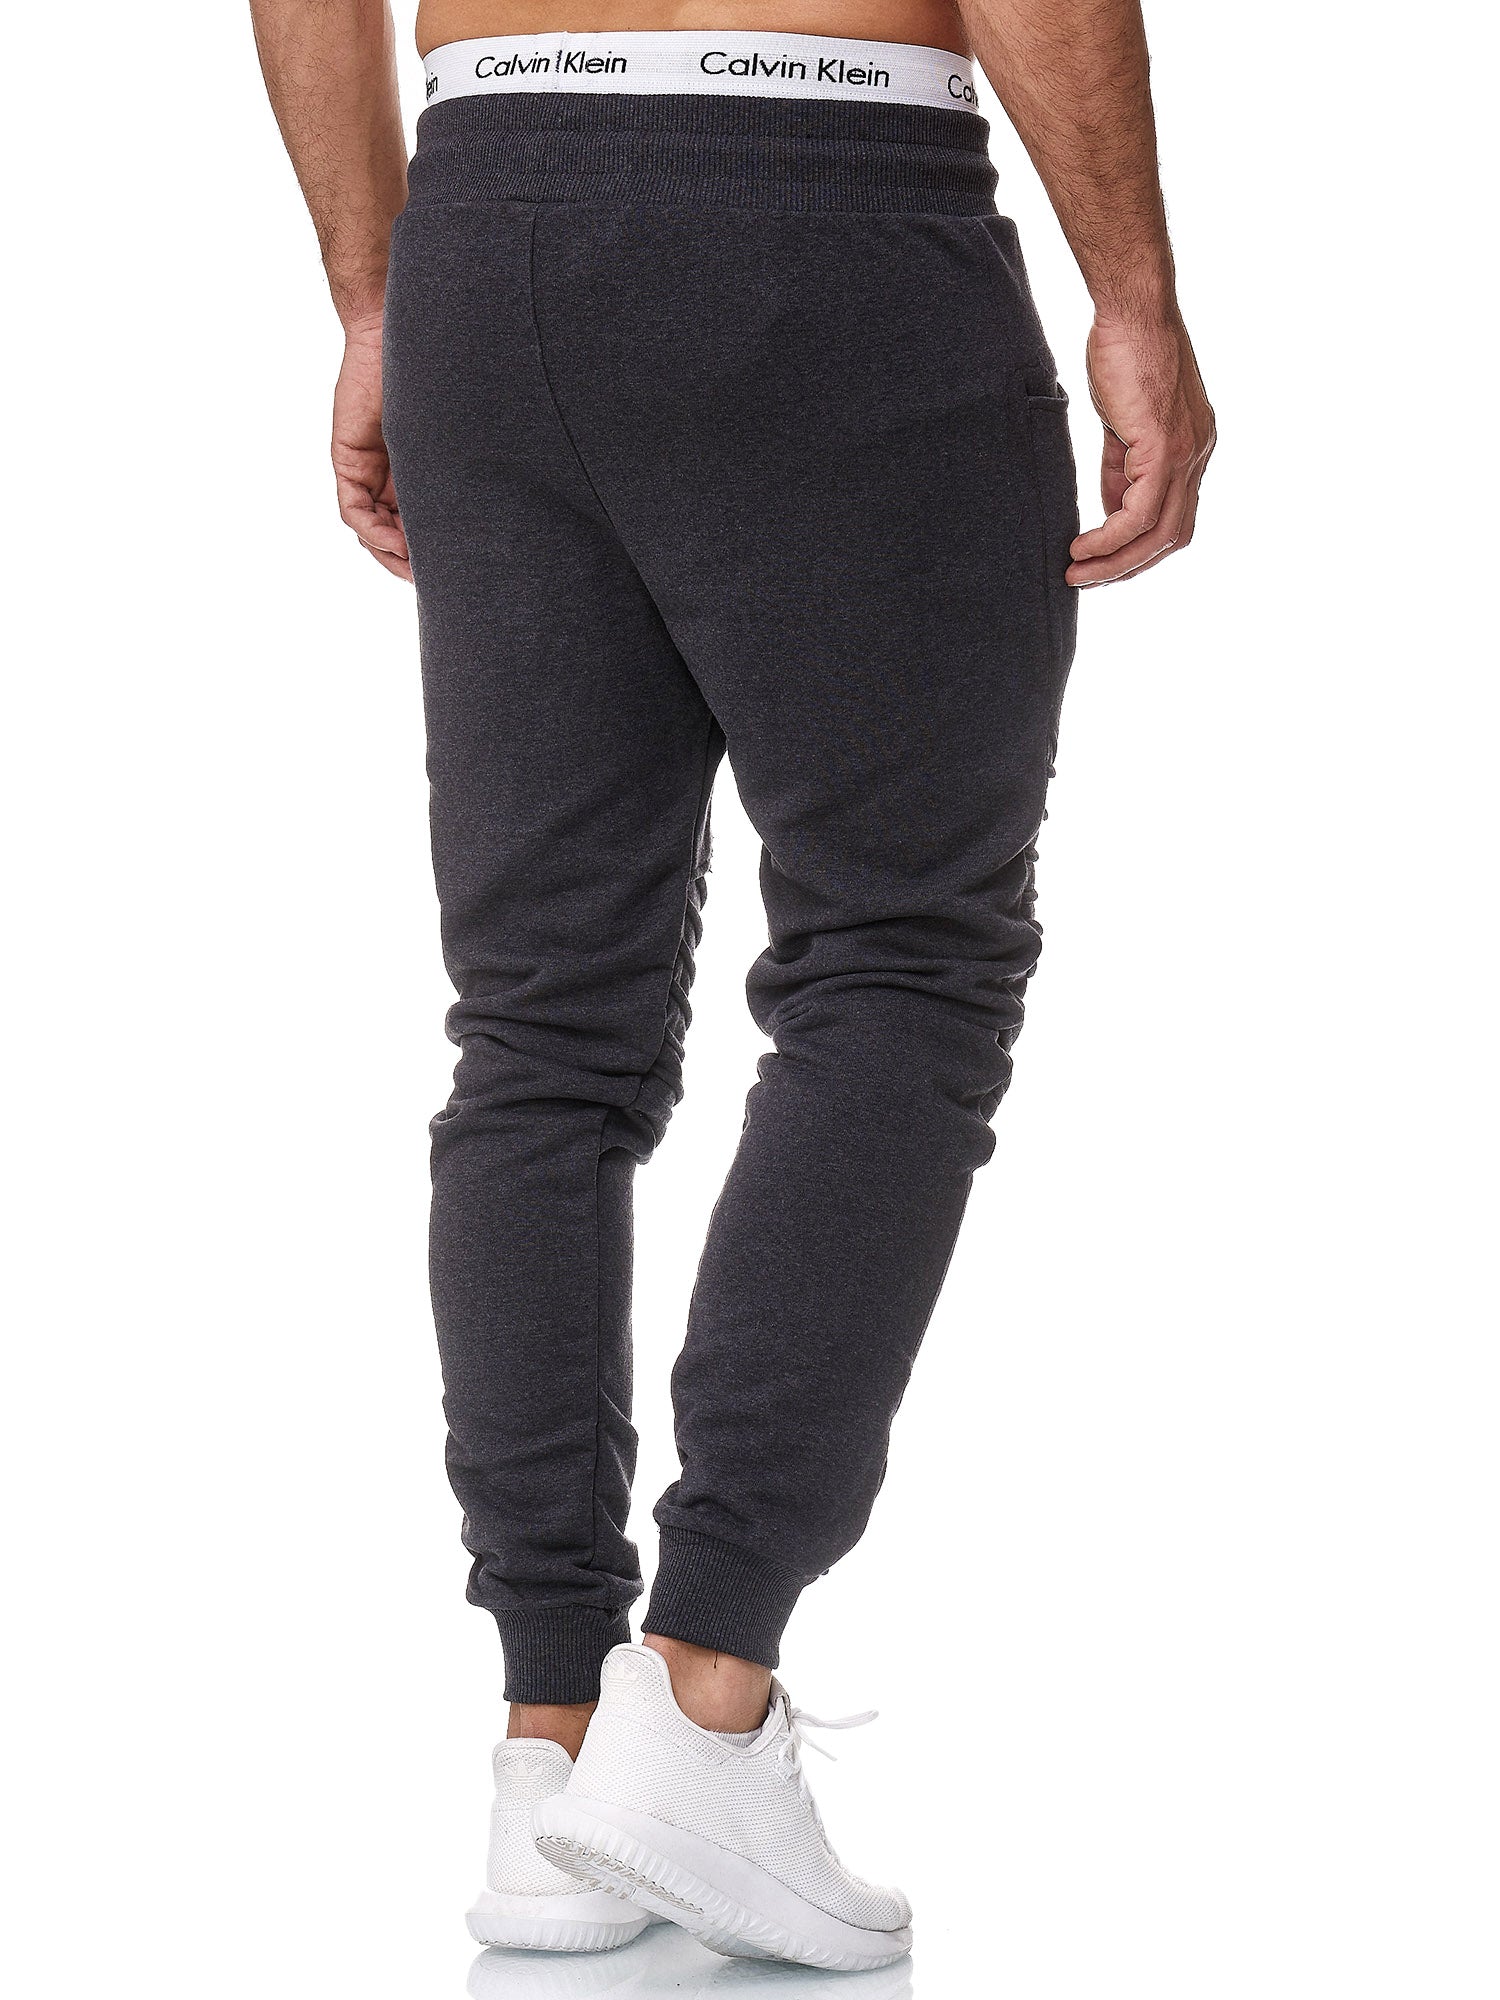 Ribbed Zipper Sweatpants Joggers - Dark Gray X2D - FASH STOP